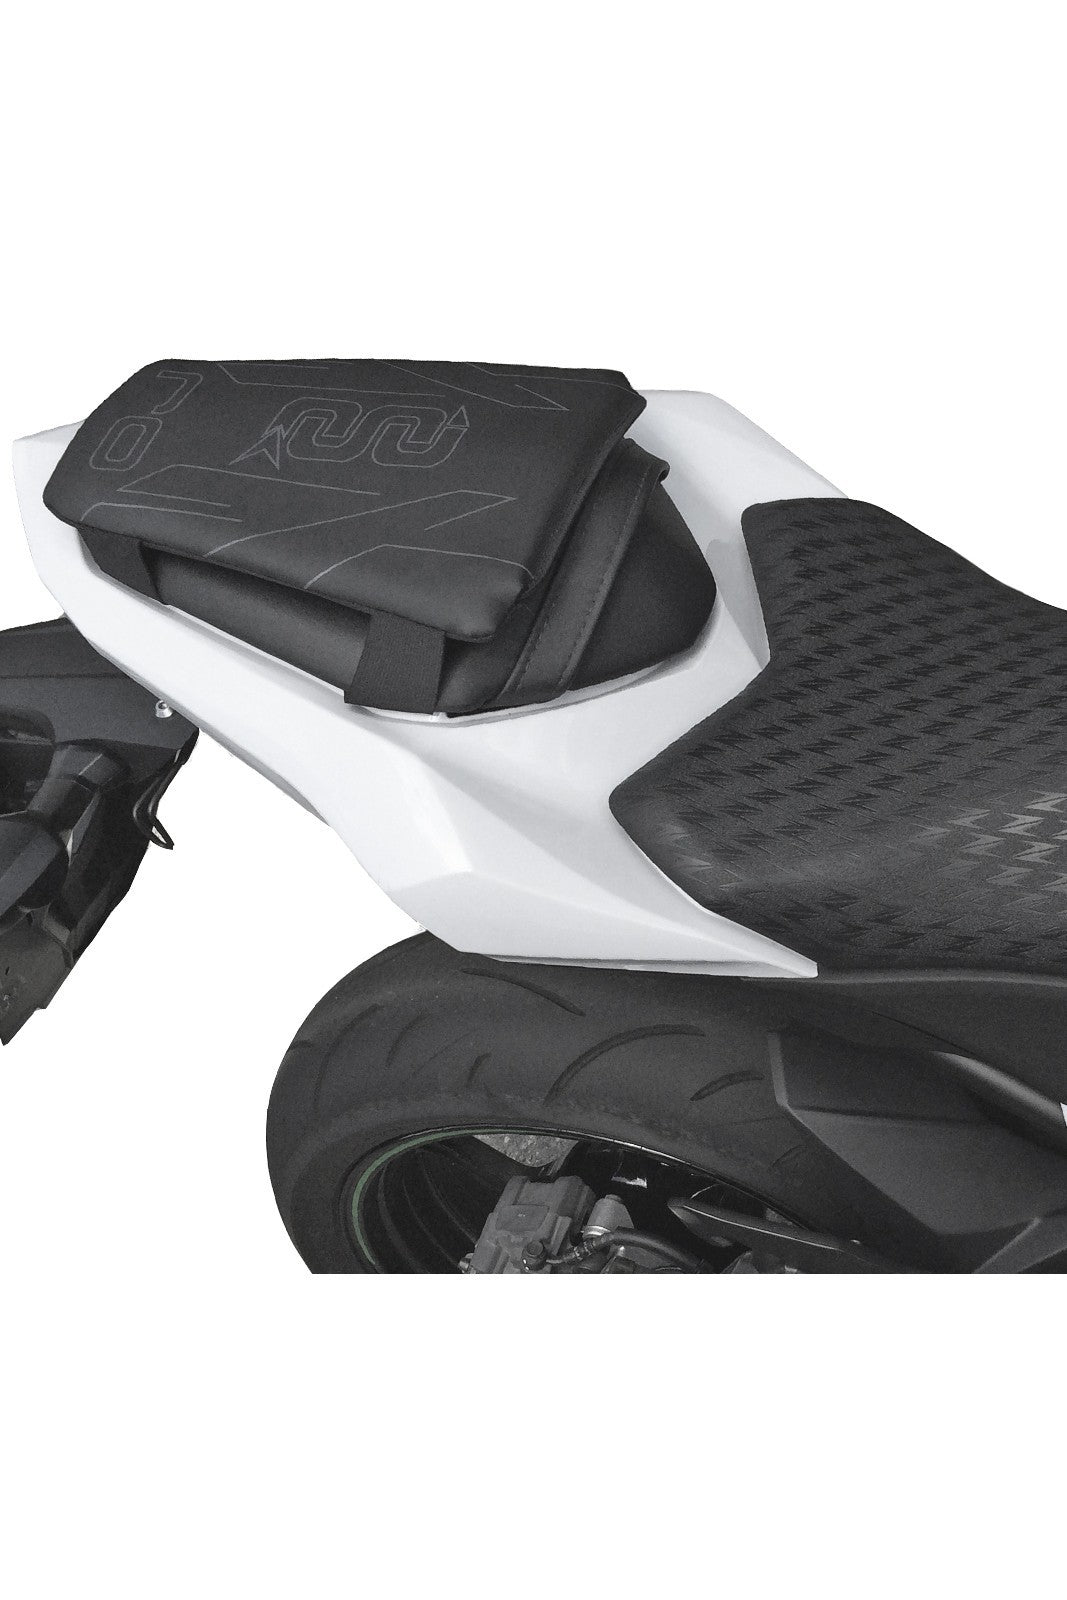 Cuscino moto OJ COMFORT moto scooter - OnTheRoad.shop - OJ